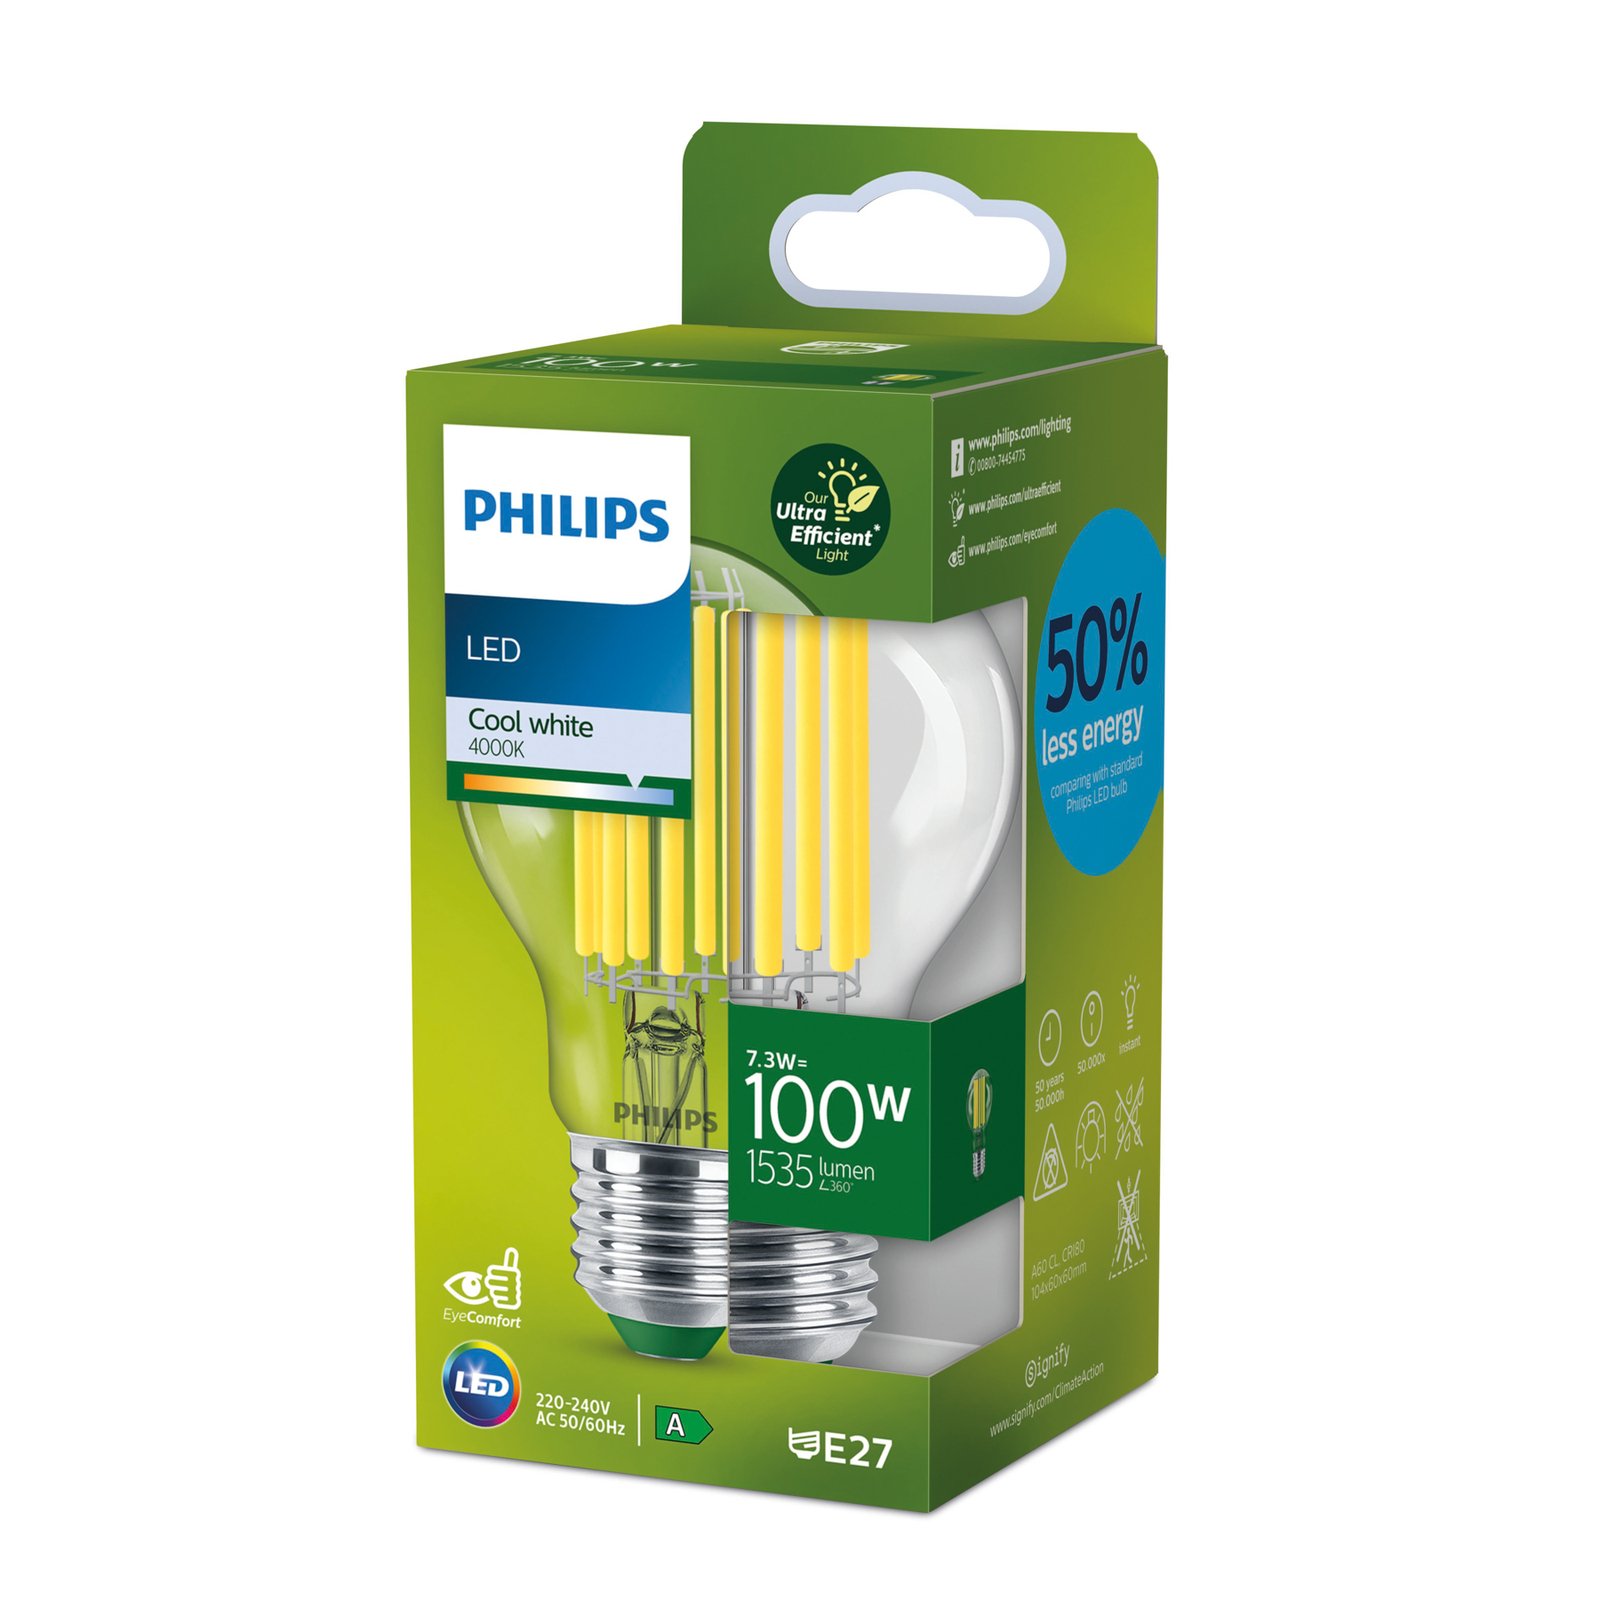 Philips E27 LED bulb A60 7.3W 1535lm 4,000K clear